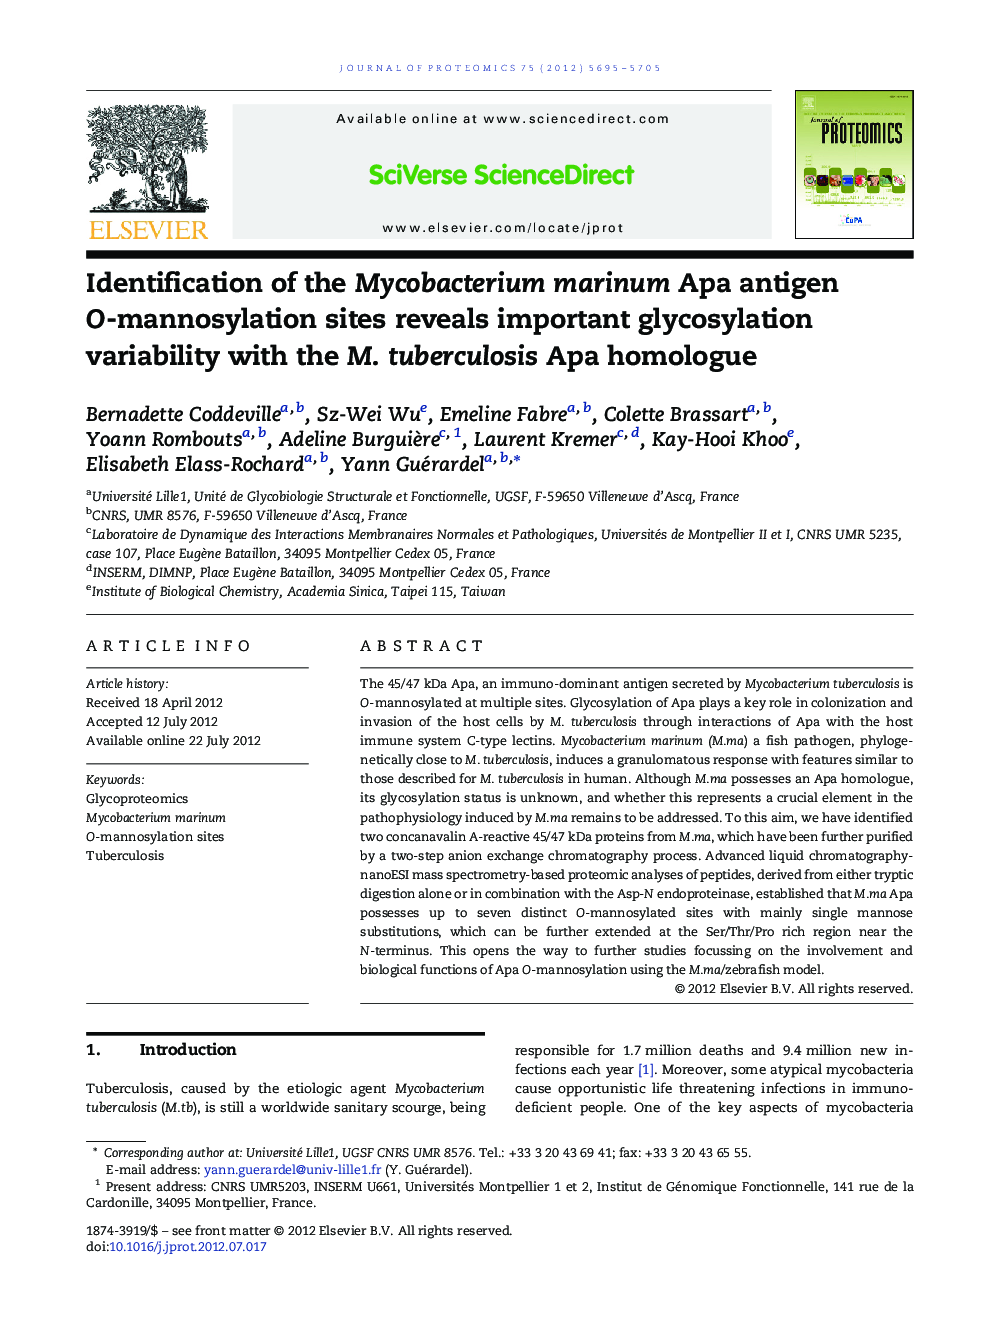 Identification of the Mycobacterium marinum Apa antigen O-mannosylation sites reveals important glycosylation variability with the M. tuberculosis Apa homologue